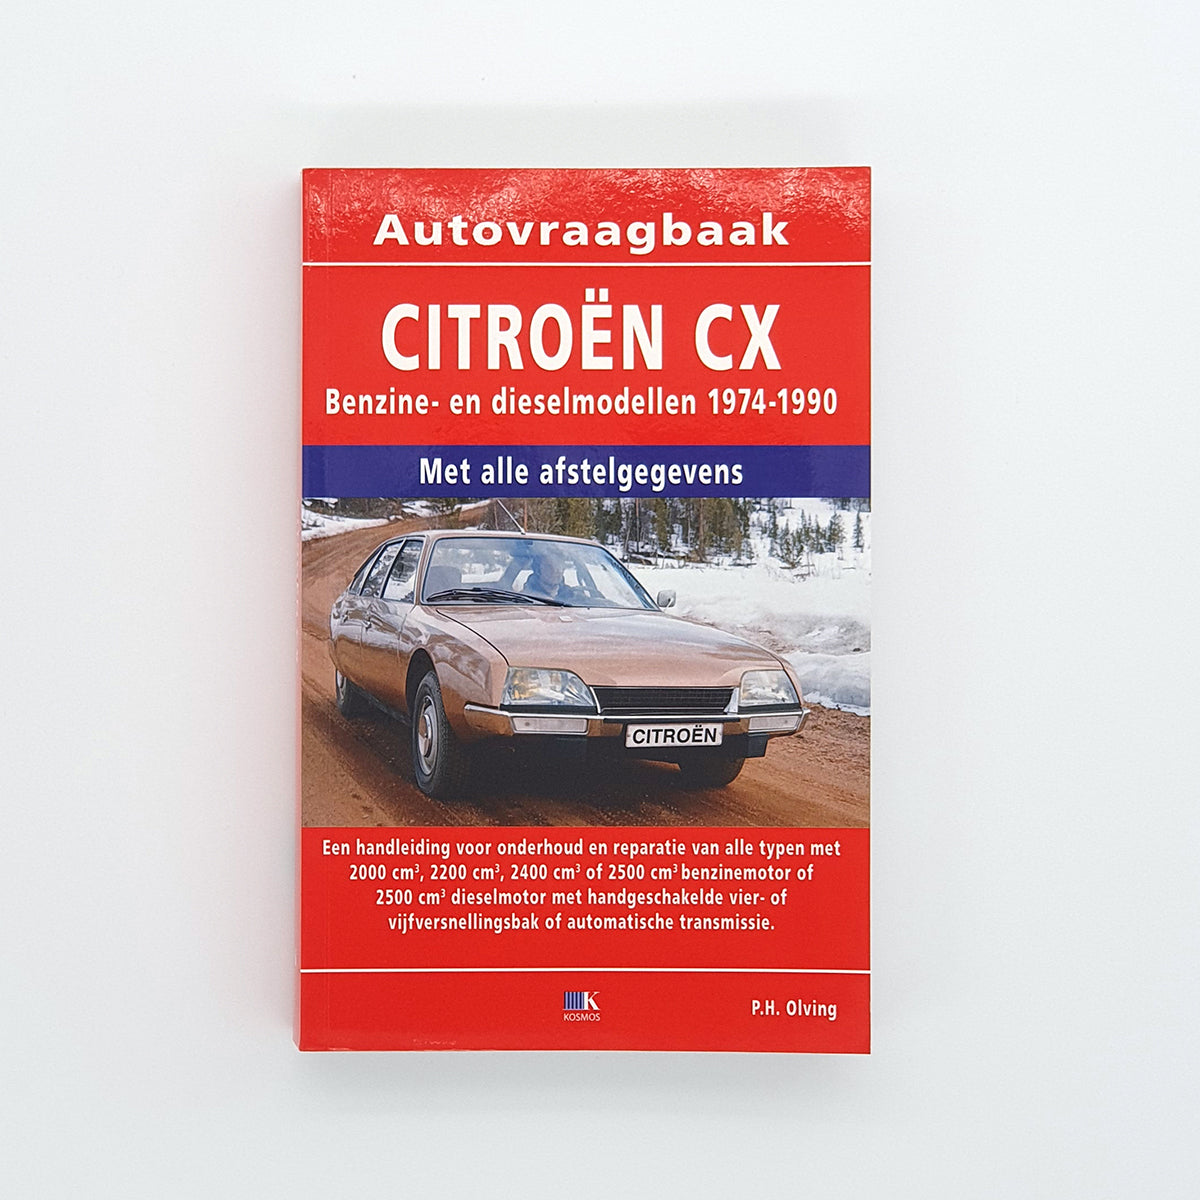 Autovraagbaak: Citroën CX